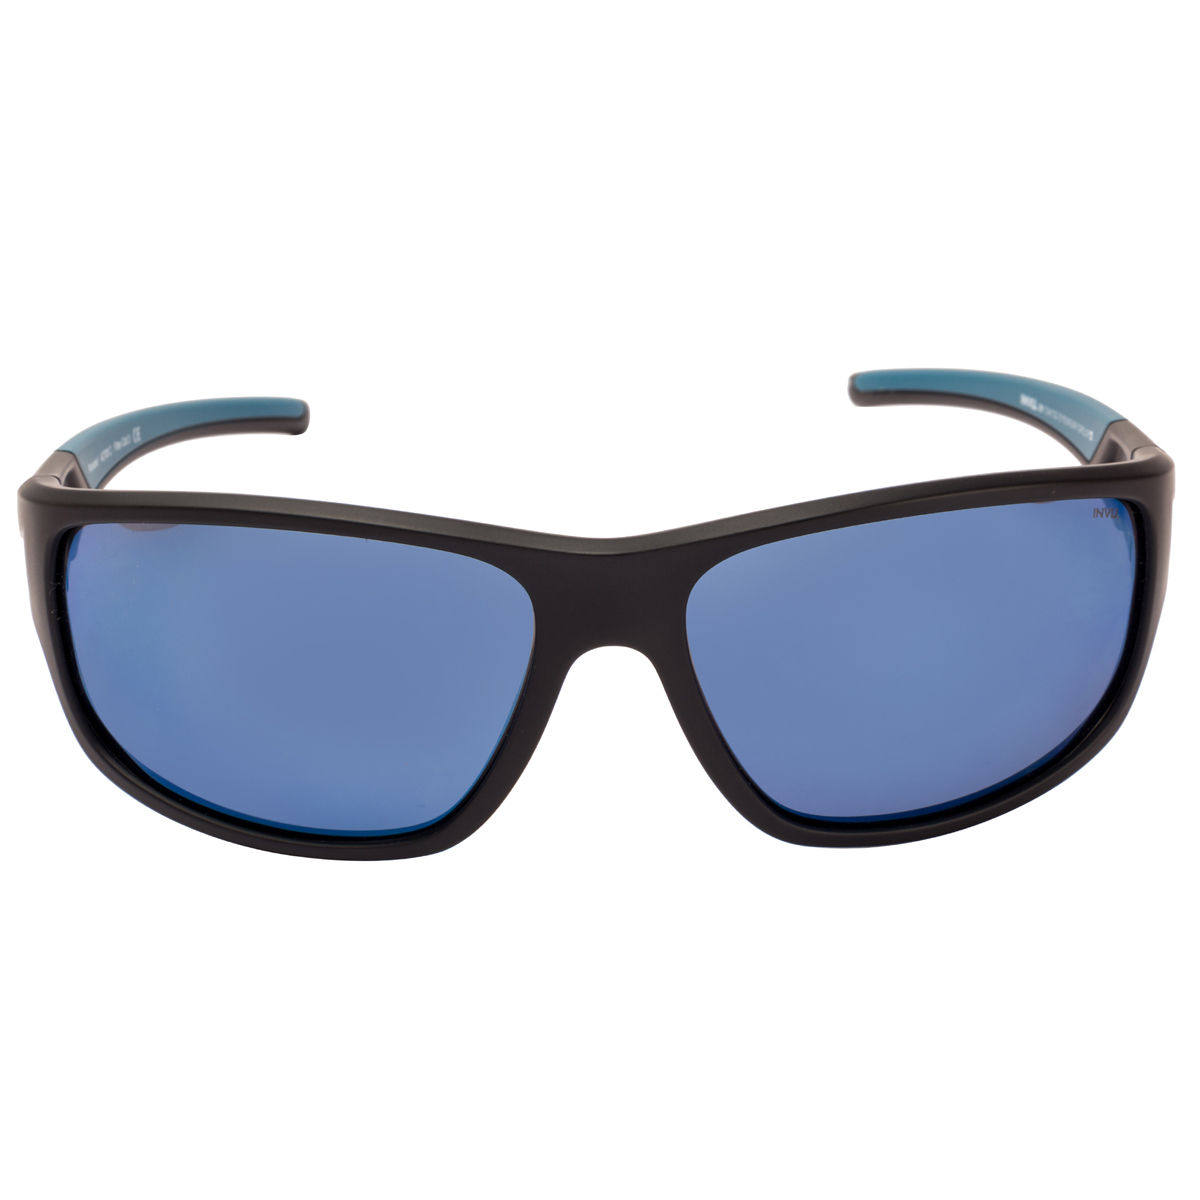 Invu Sunglasses Rectangular Sunglass With Blue Lens For Men